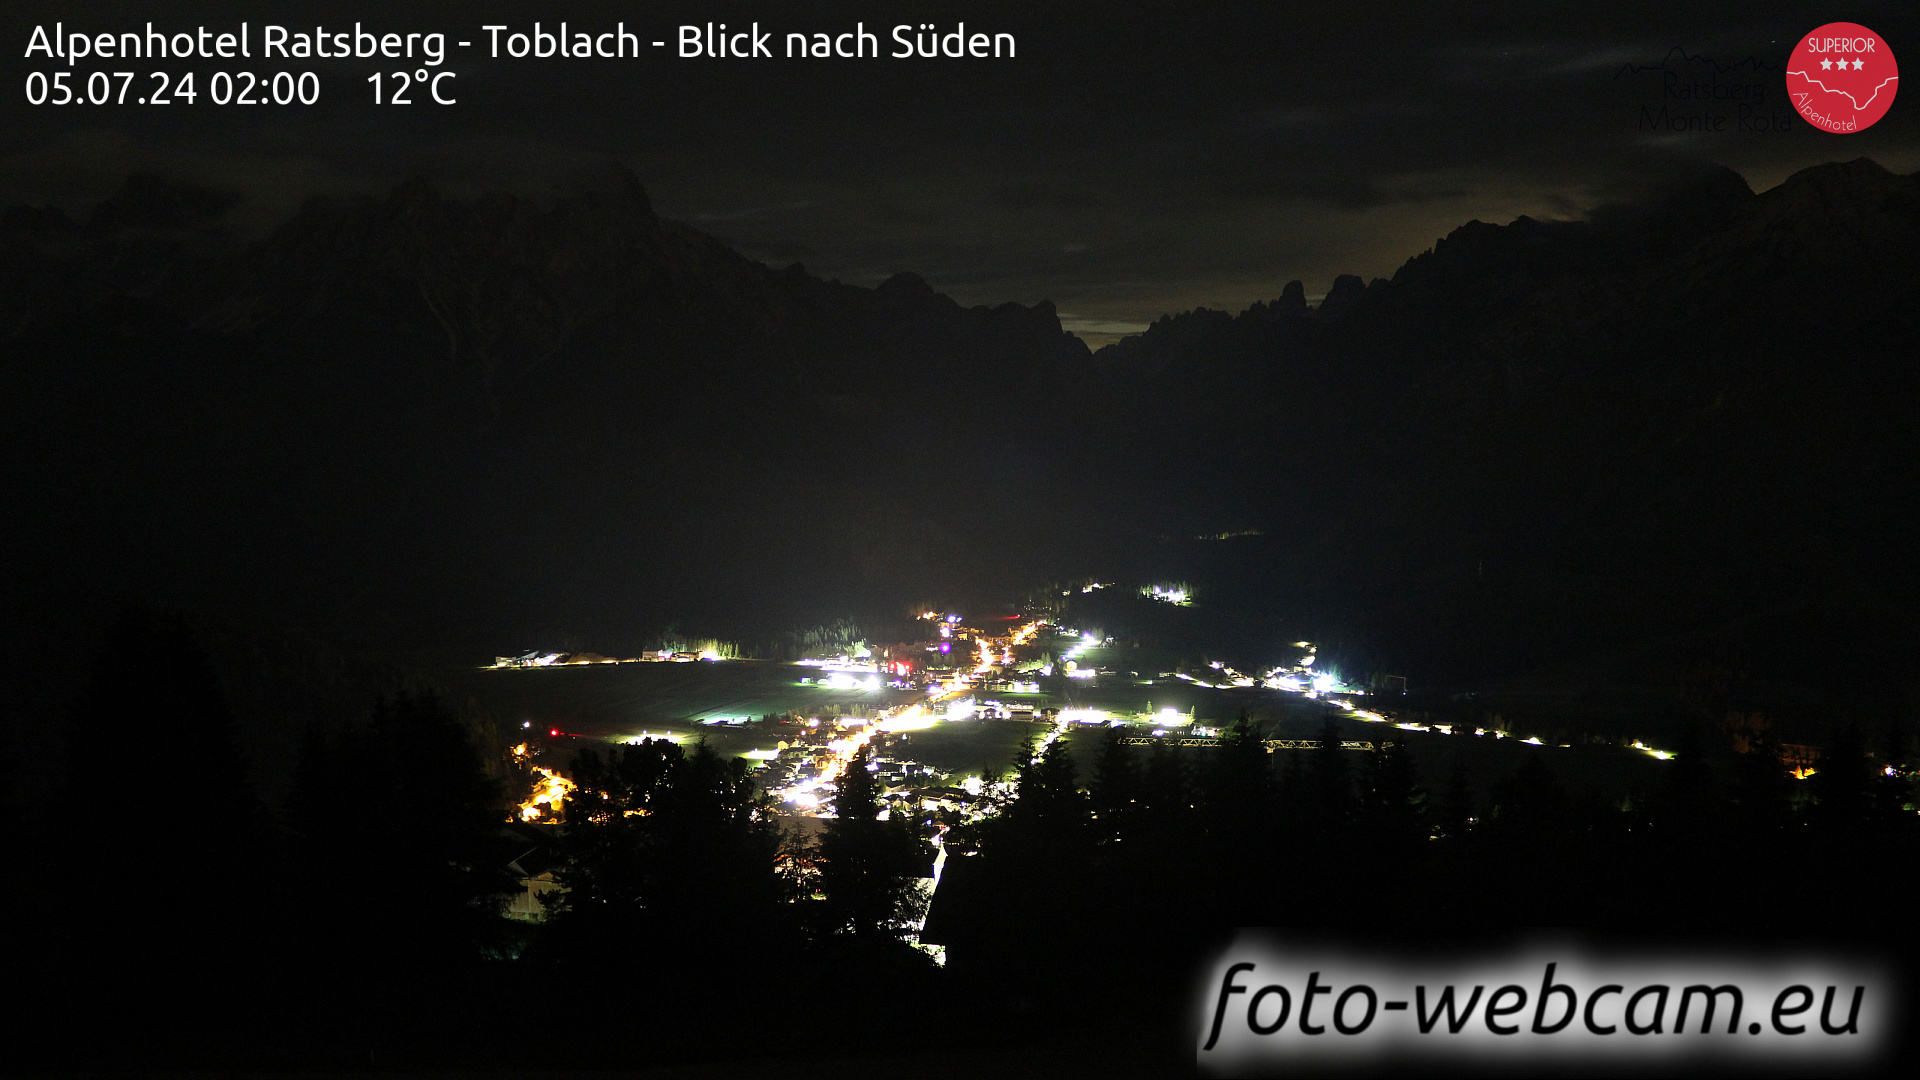 Toblach (Dolomites) Thu. 02:03